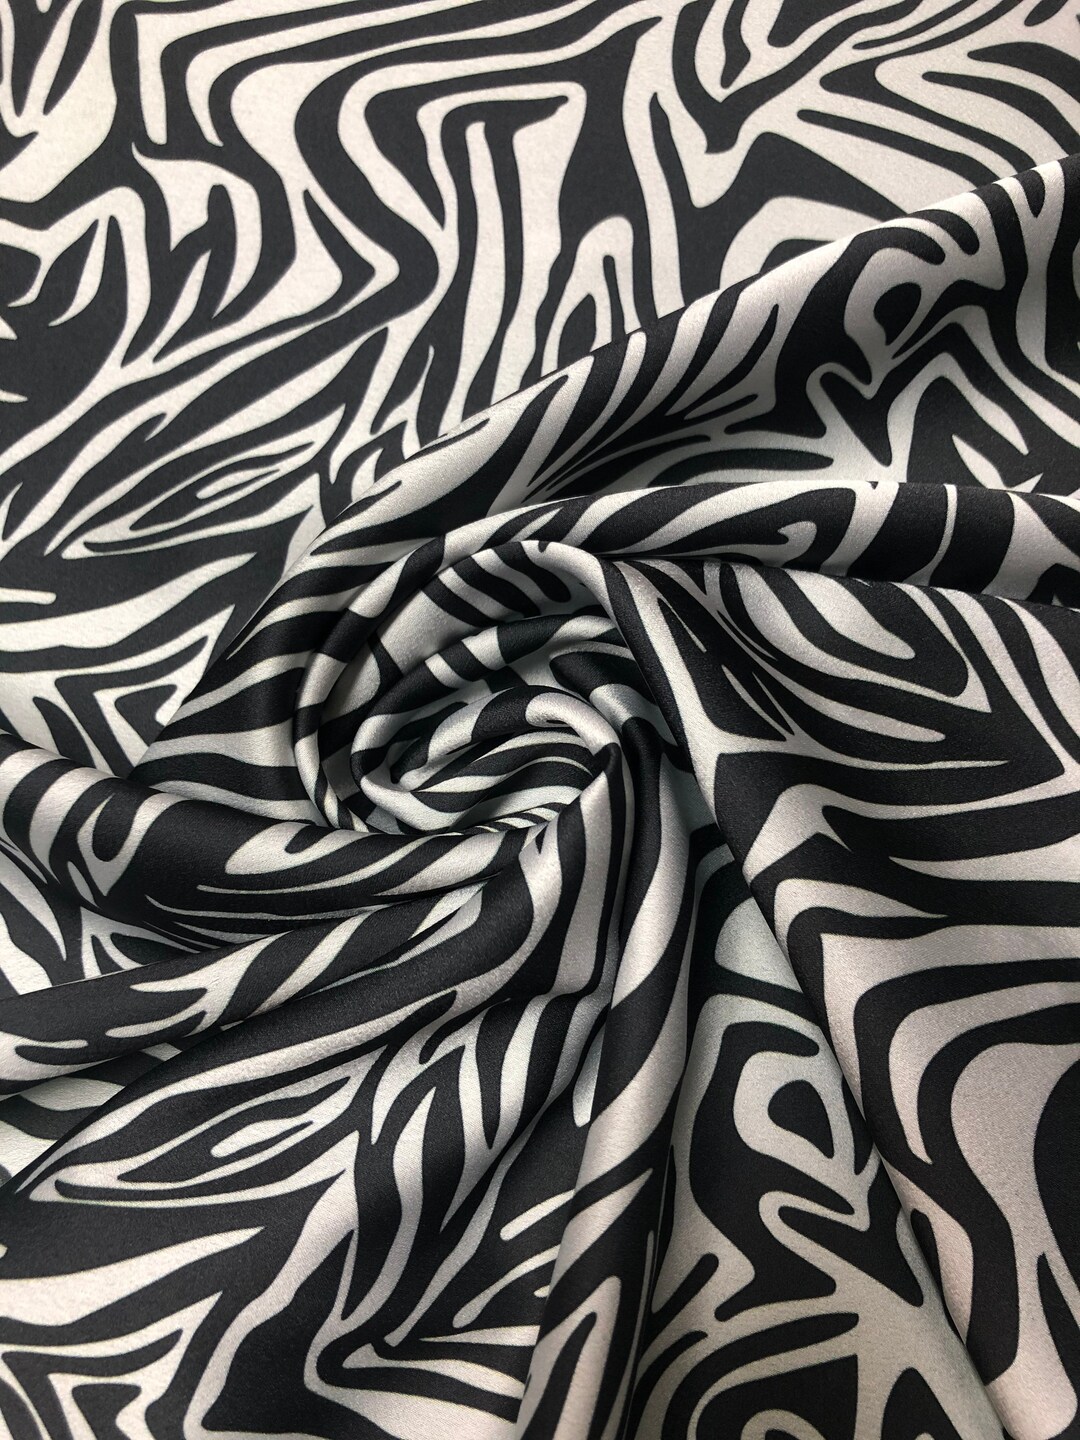 Digital Satin Charmouse Print 54 Wide. Beautiful White Black Zebra ...